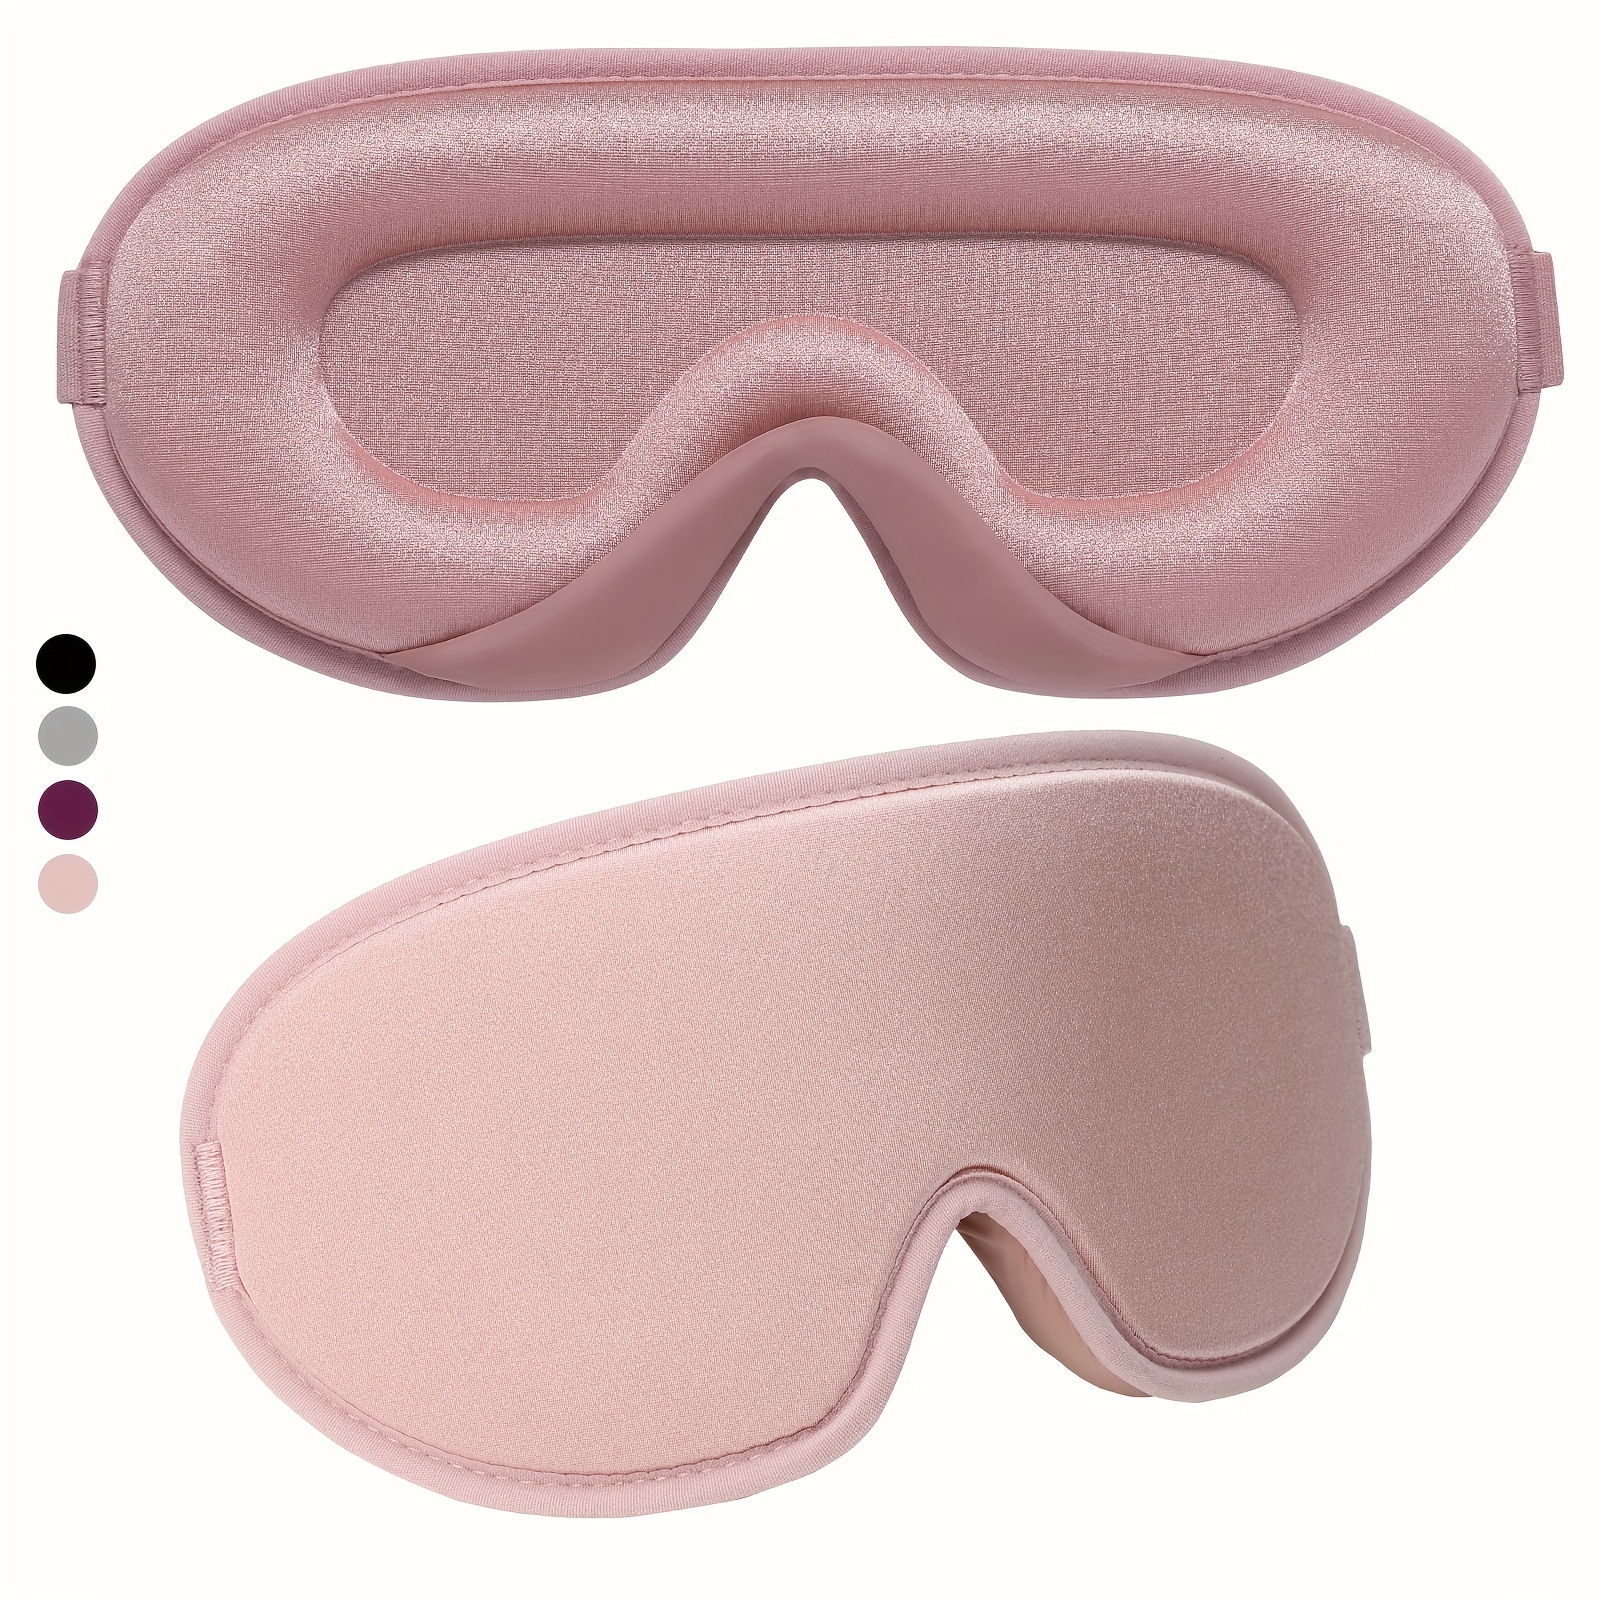 

Sleep Mask 3d Eye Covers Soft Foam Comfortable Sleeping Mask 0 Eye Pressure Cup Blindfold For Men Women With Adjustable Strap, Travel Yoga Nap Pink Purple Grey Black